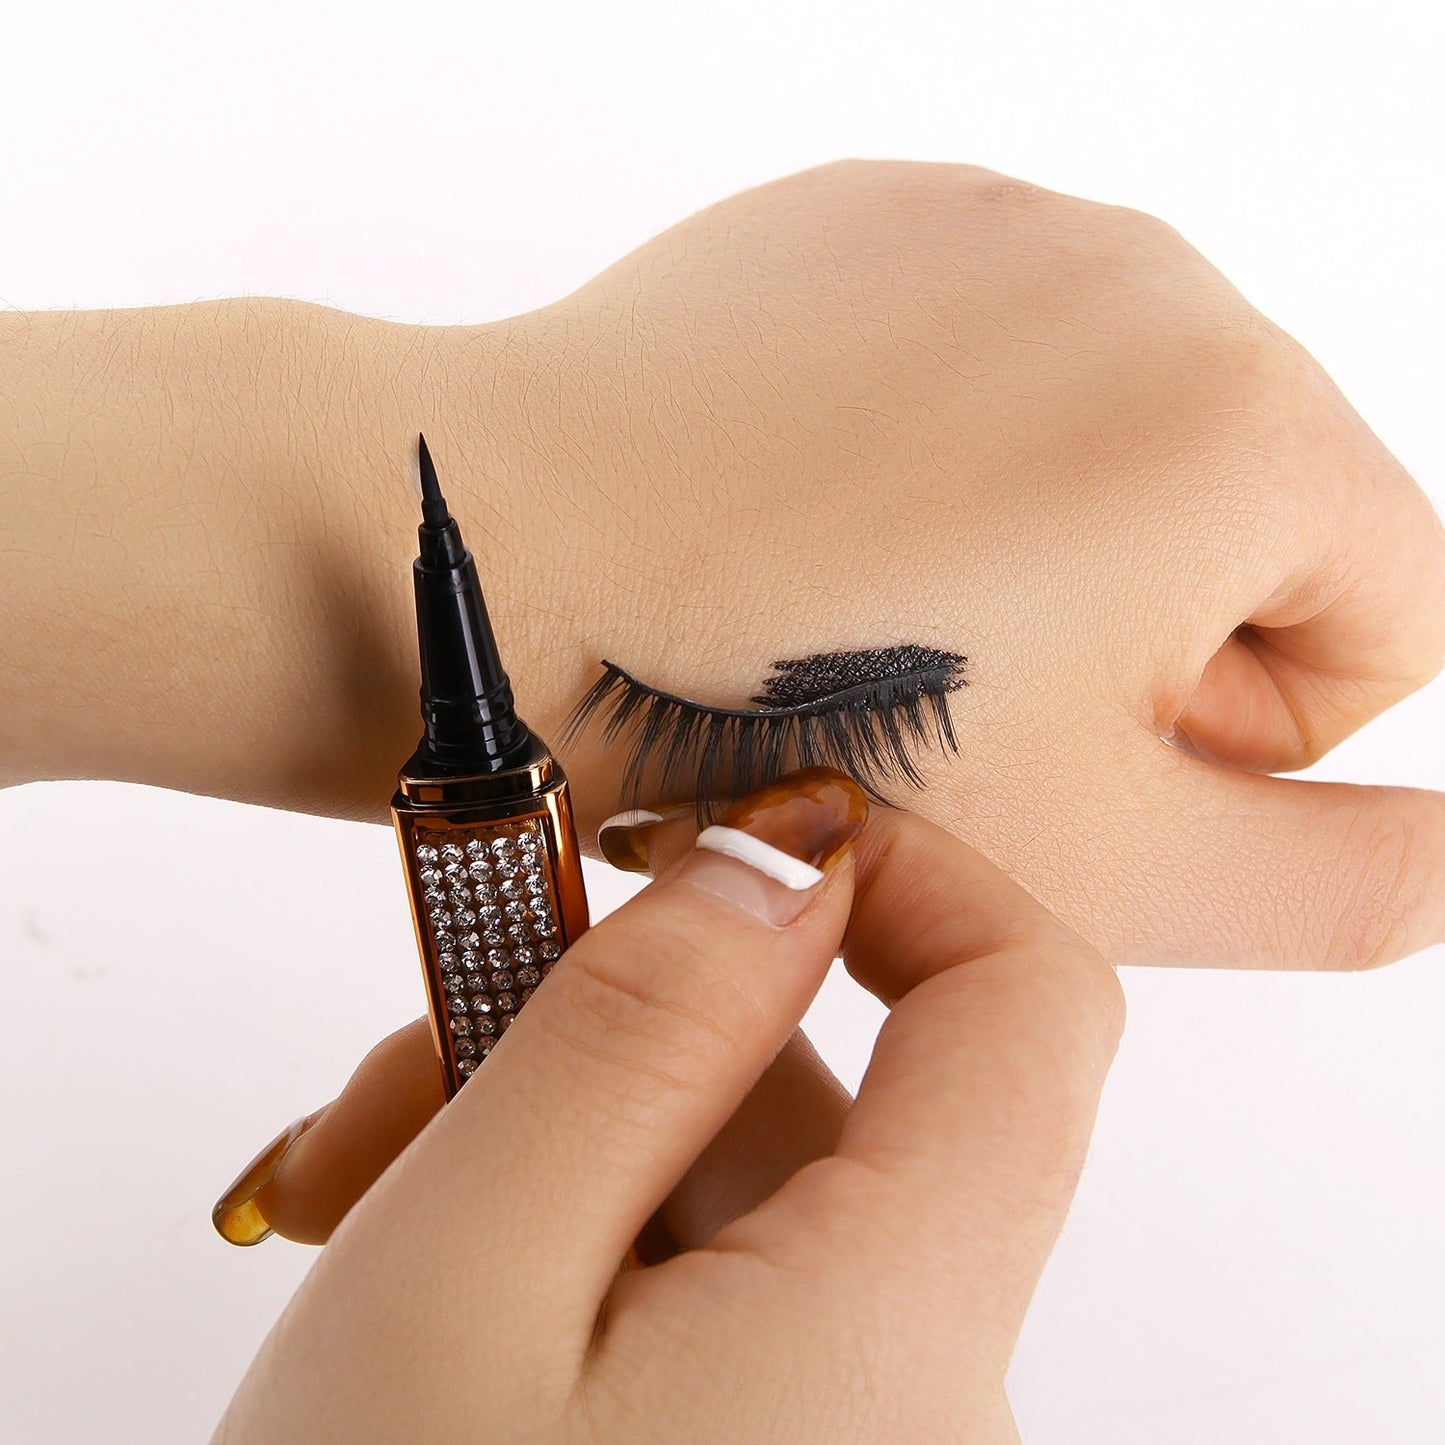 Self-adhesive Waterproof Liquid Eyeliner Pencil - SixtyKey new model design Dubai fashion style 2021 best price